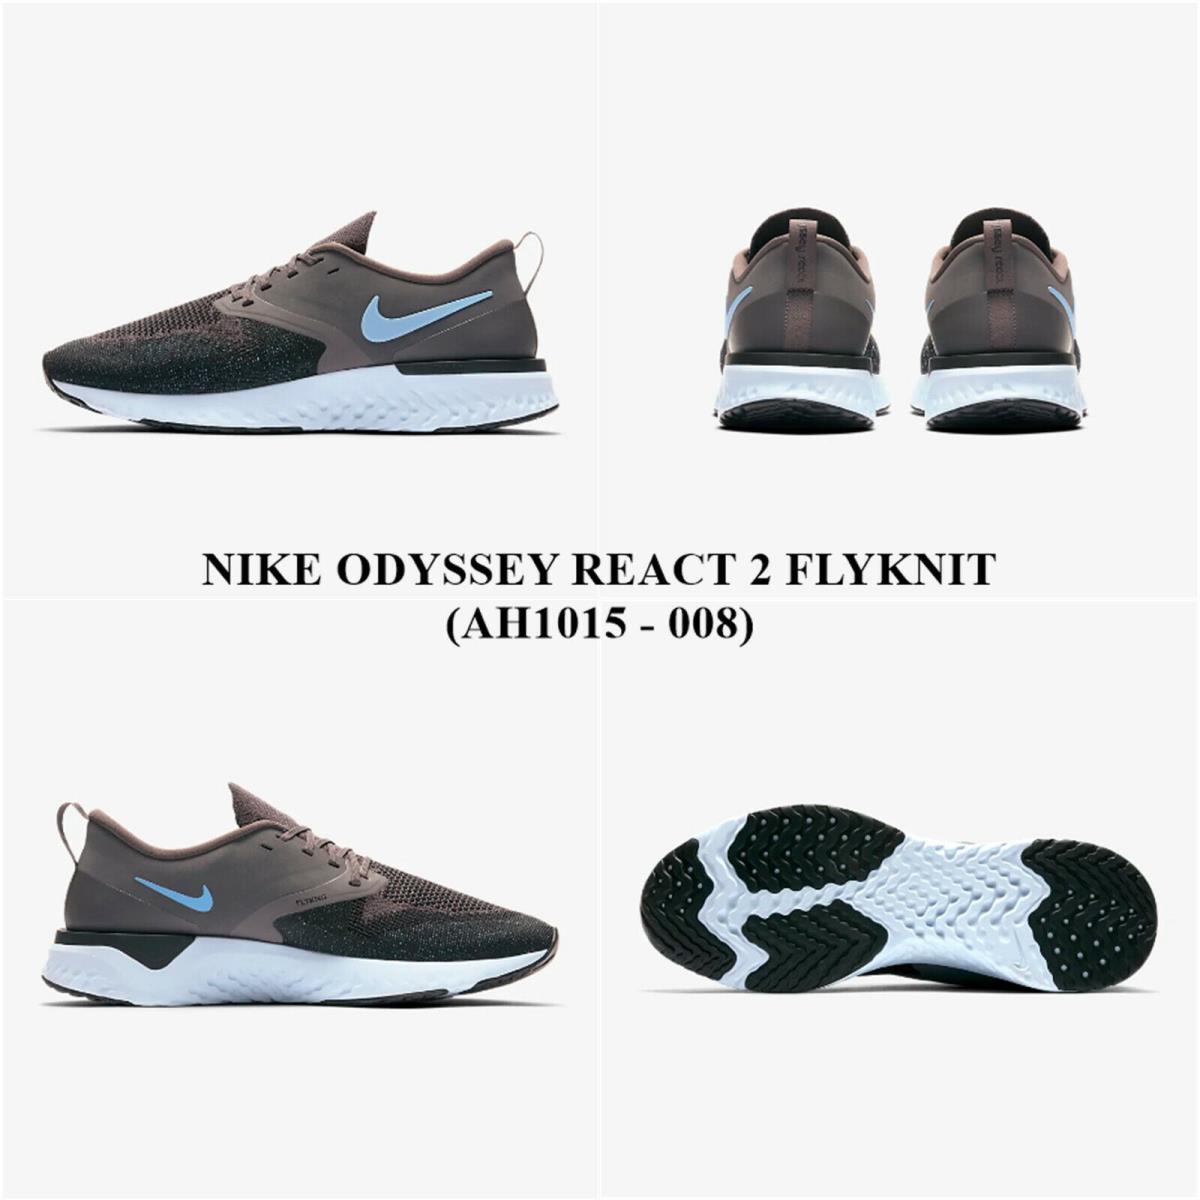 Nike Odyssey React 2 Flyknit AH1015 - 008 Men`s Running Shoes.nwb NO Lid - THUNDER GREY/LIGHT BLUE-BLACK , THUNDER GREY/LIGHT BLUE-BLACK Manufacturer